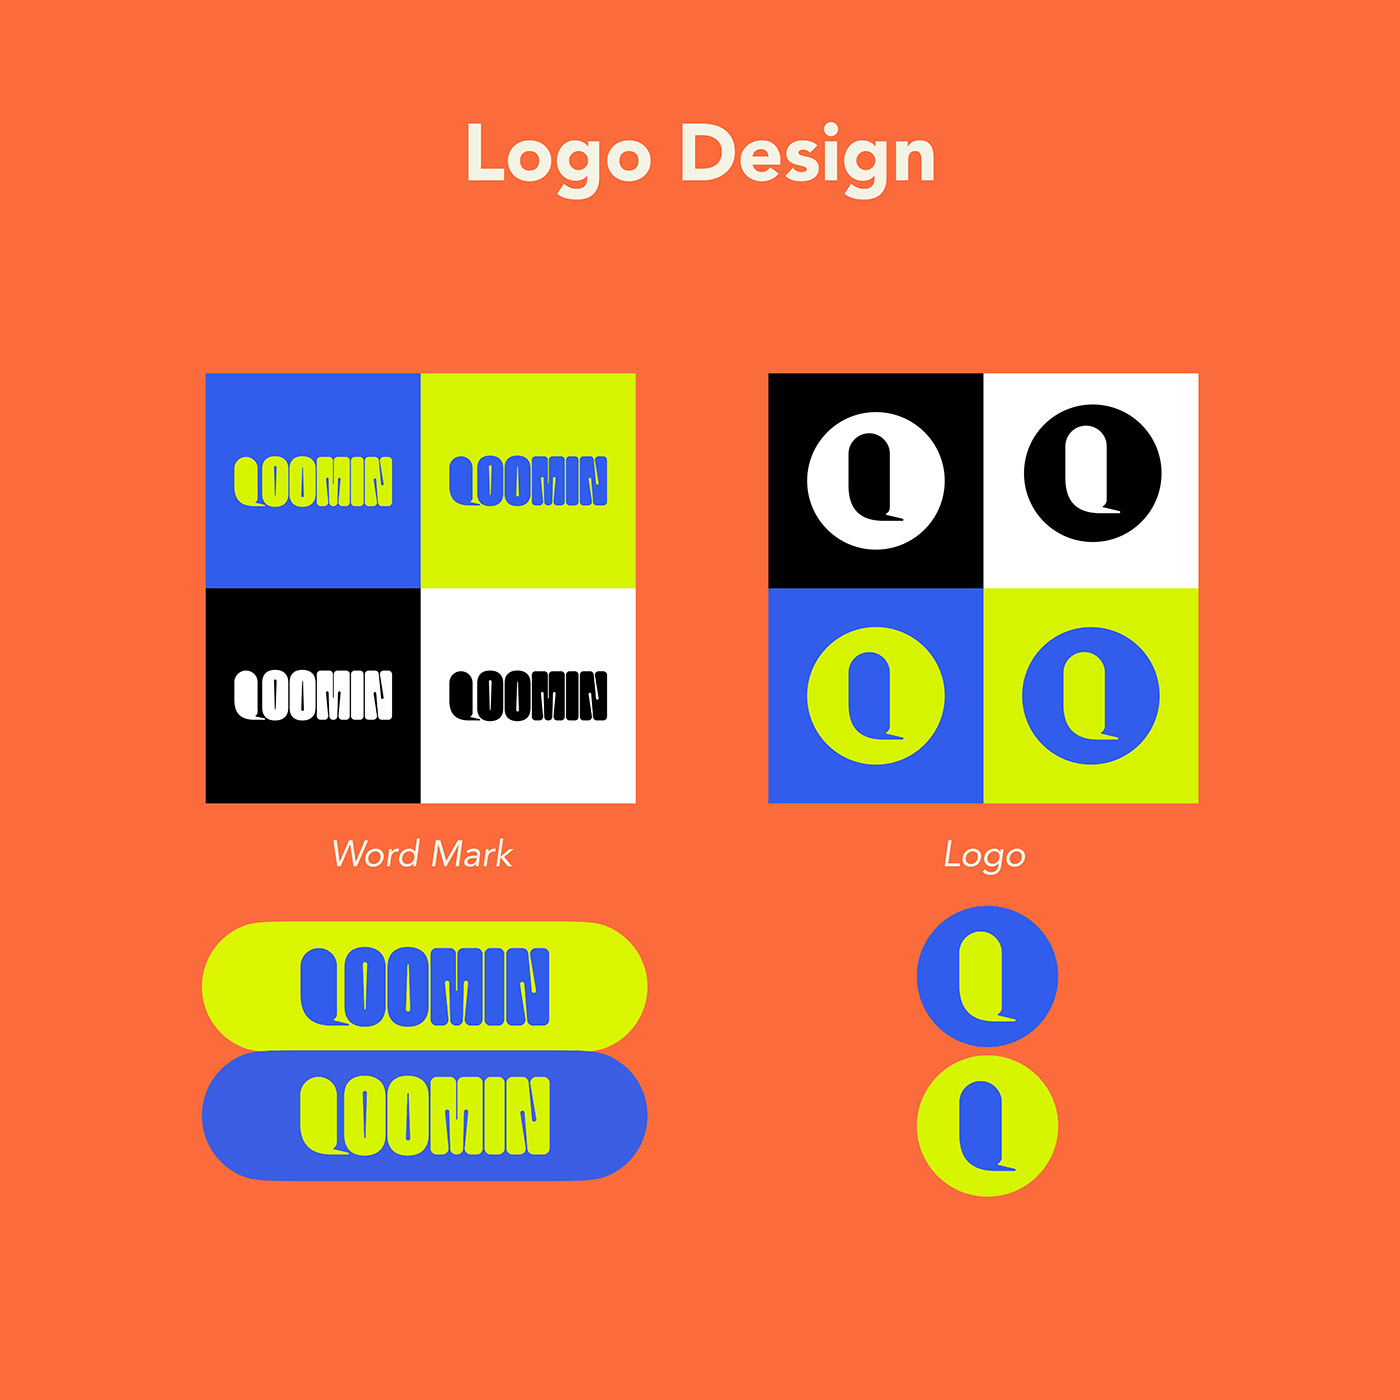 design branding  Logo Design brand identity adobe illustrator Graphic Designer Adobe Photoshop